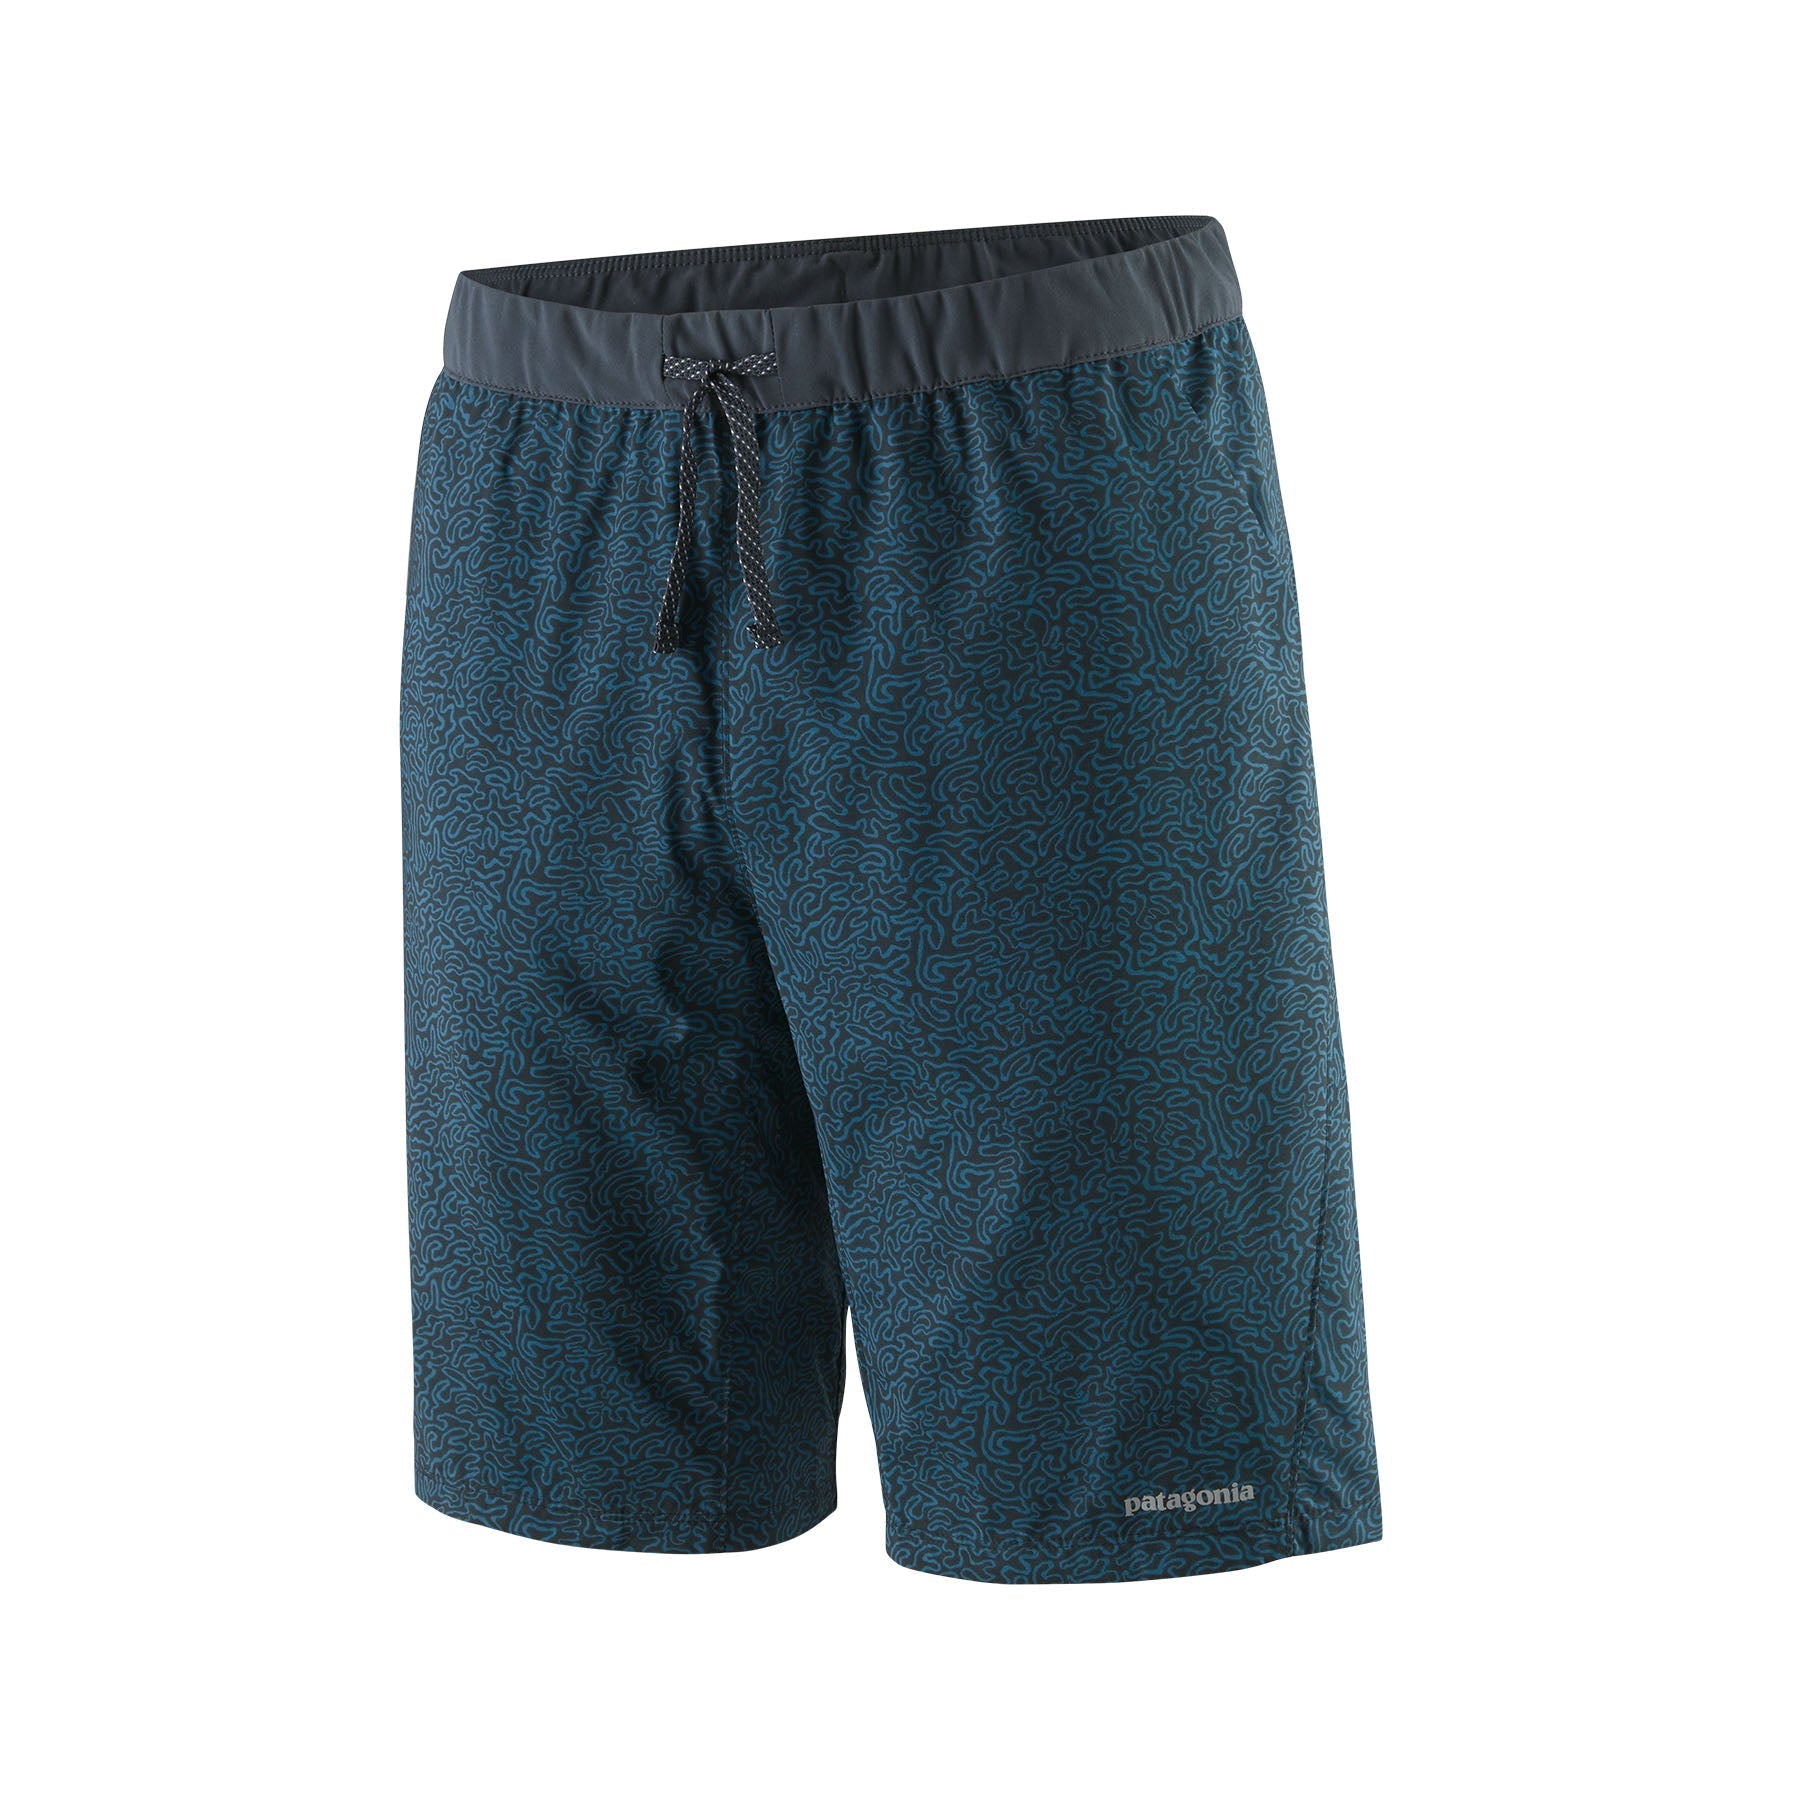 Men's Terrebonne Shorts - 10"